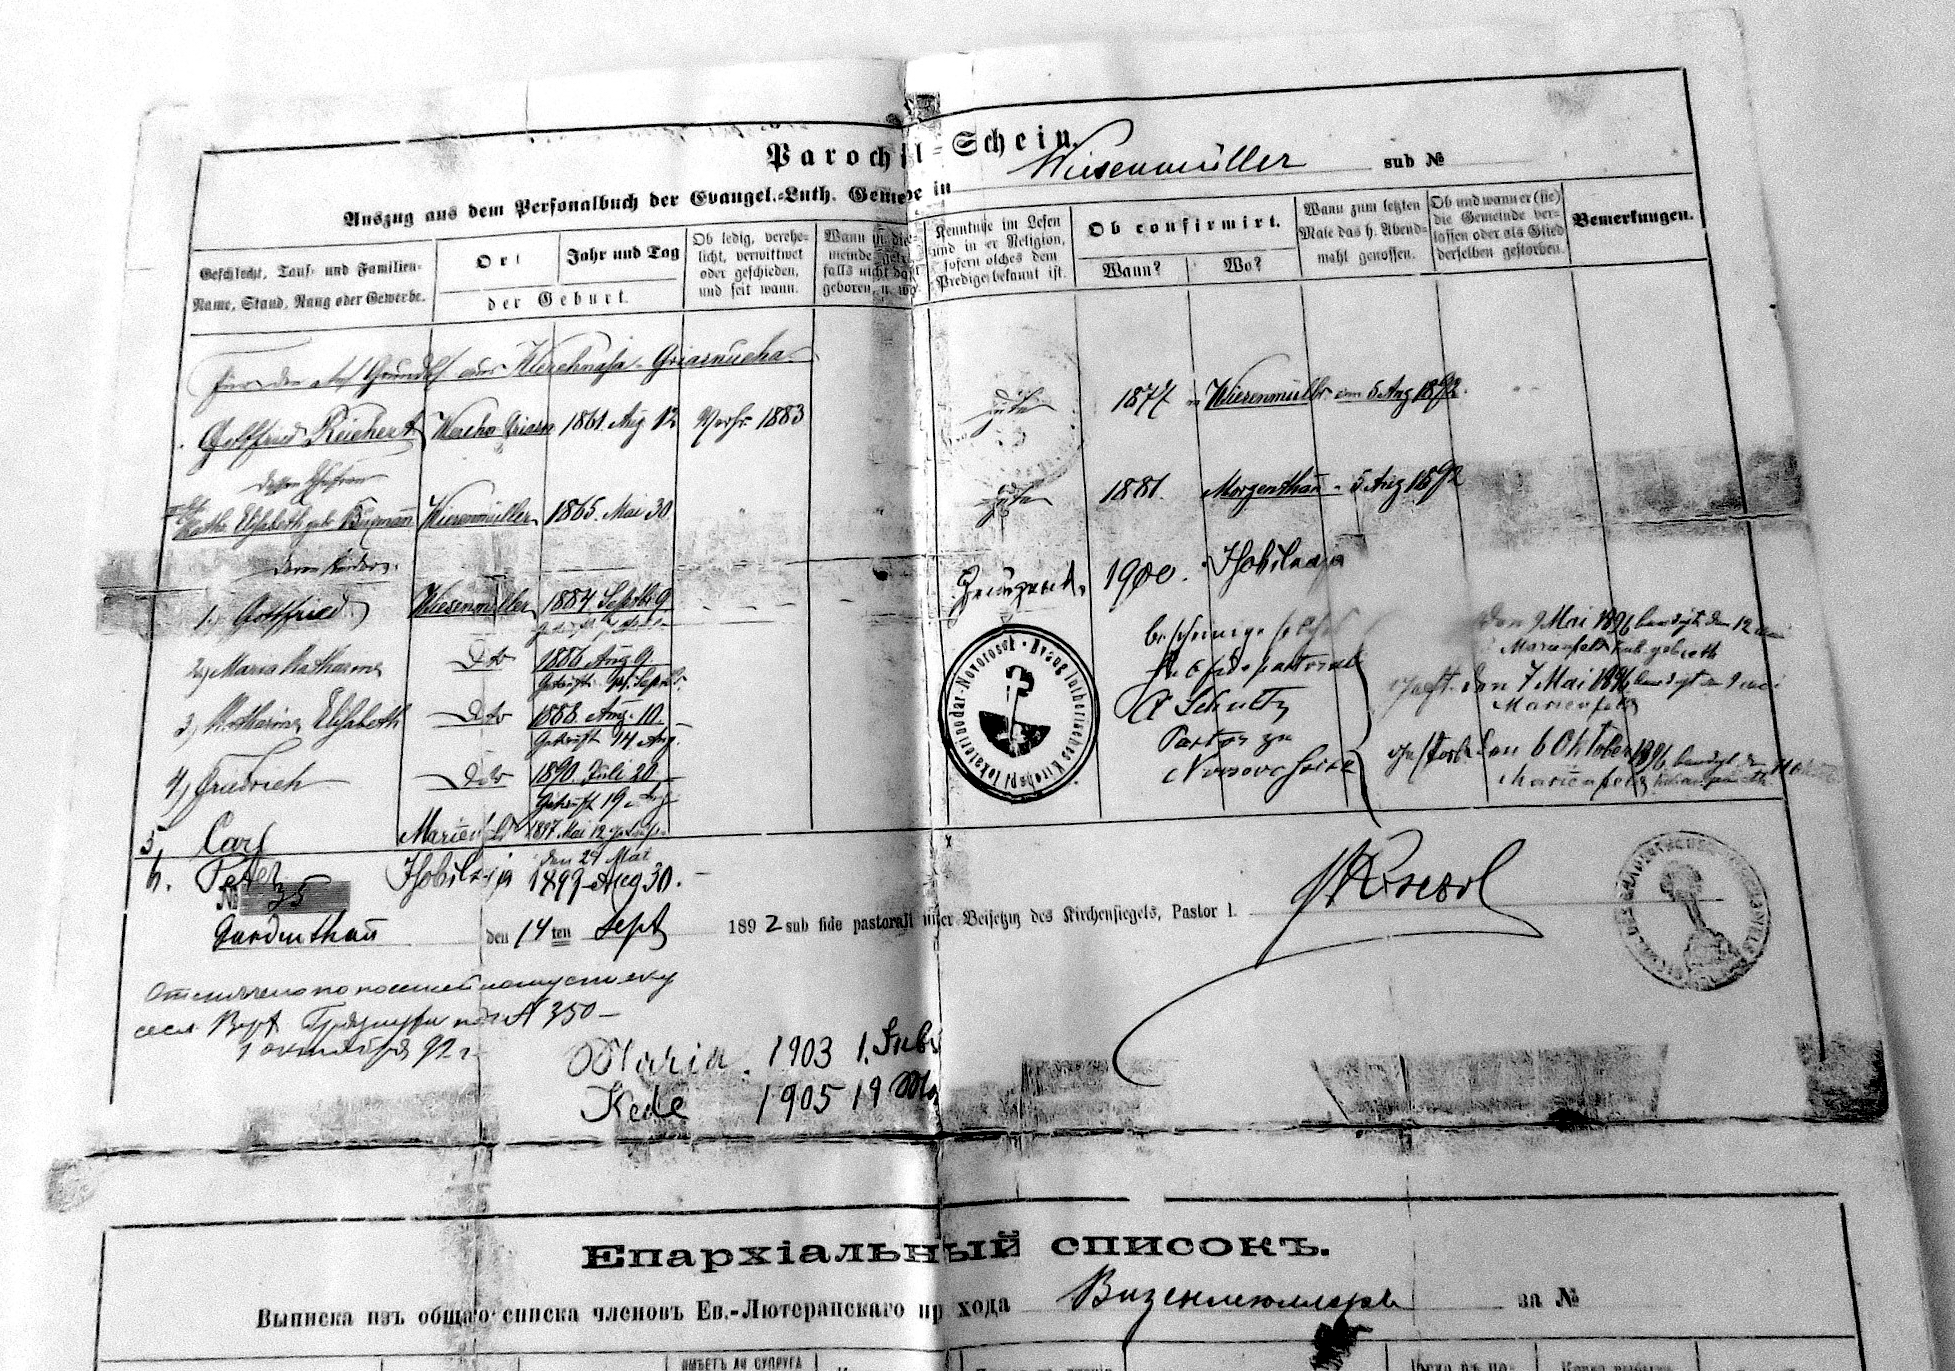 Parochial certificate for the Gottfried and Catharina Elisabeth Reichert family from Wiesenmüller. Courtesy of Elizabeth Lien.